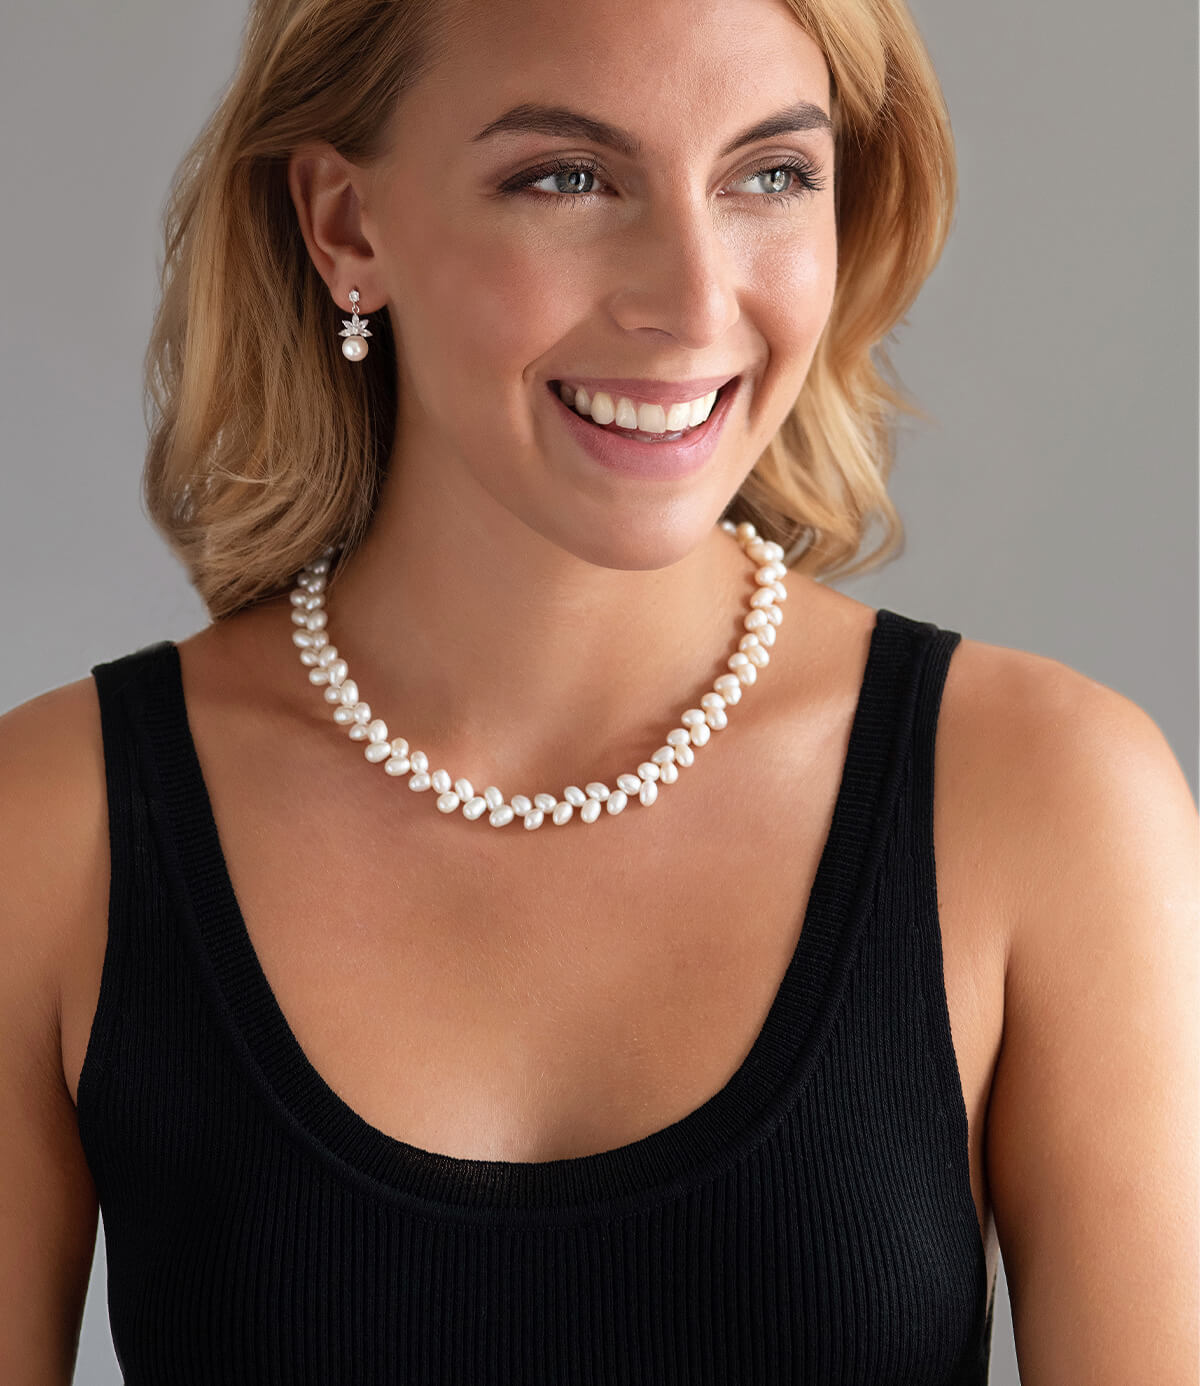 Pearl necklaces 